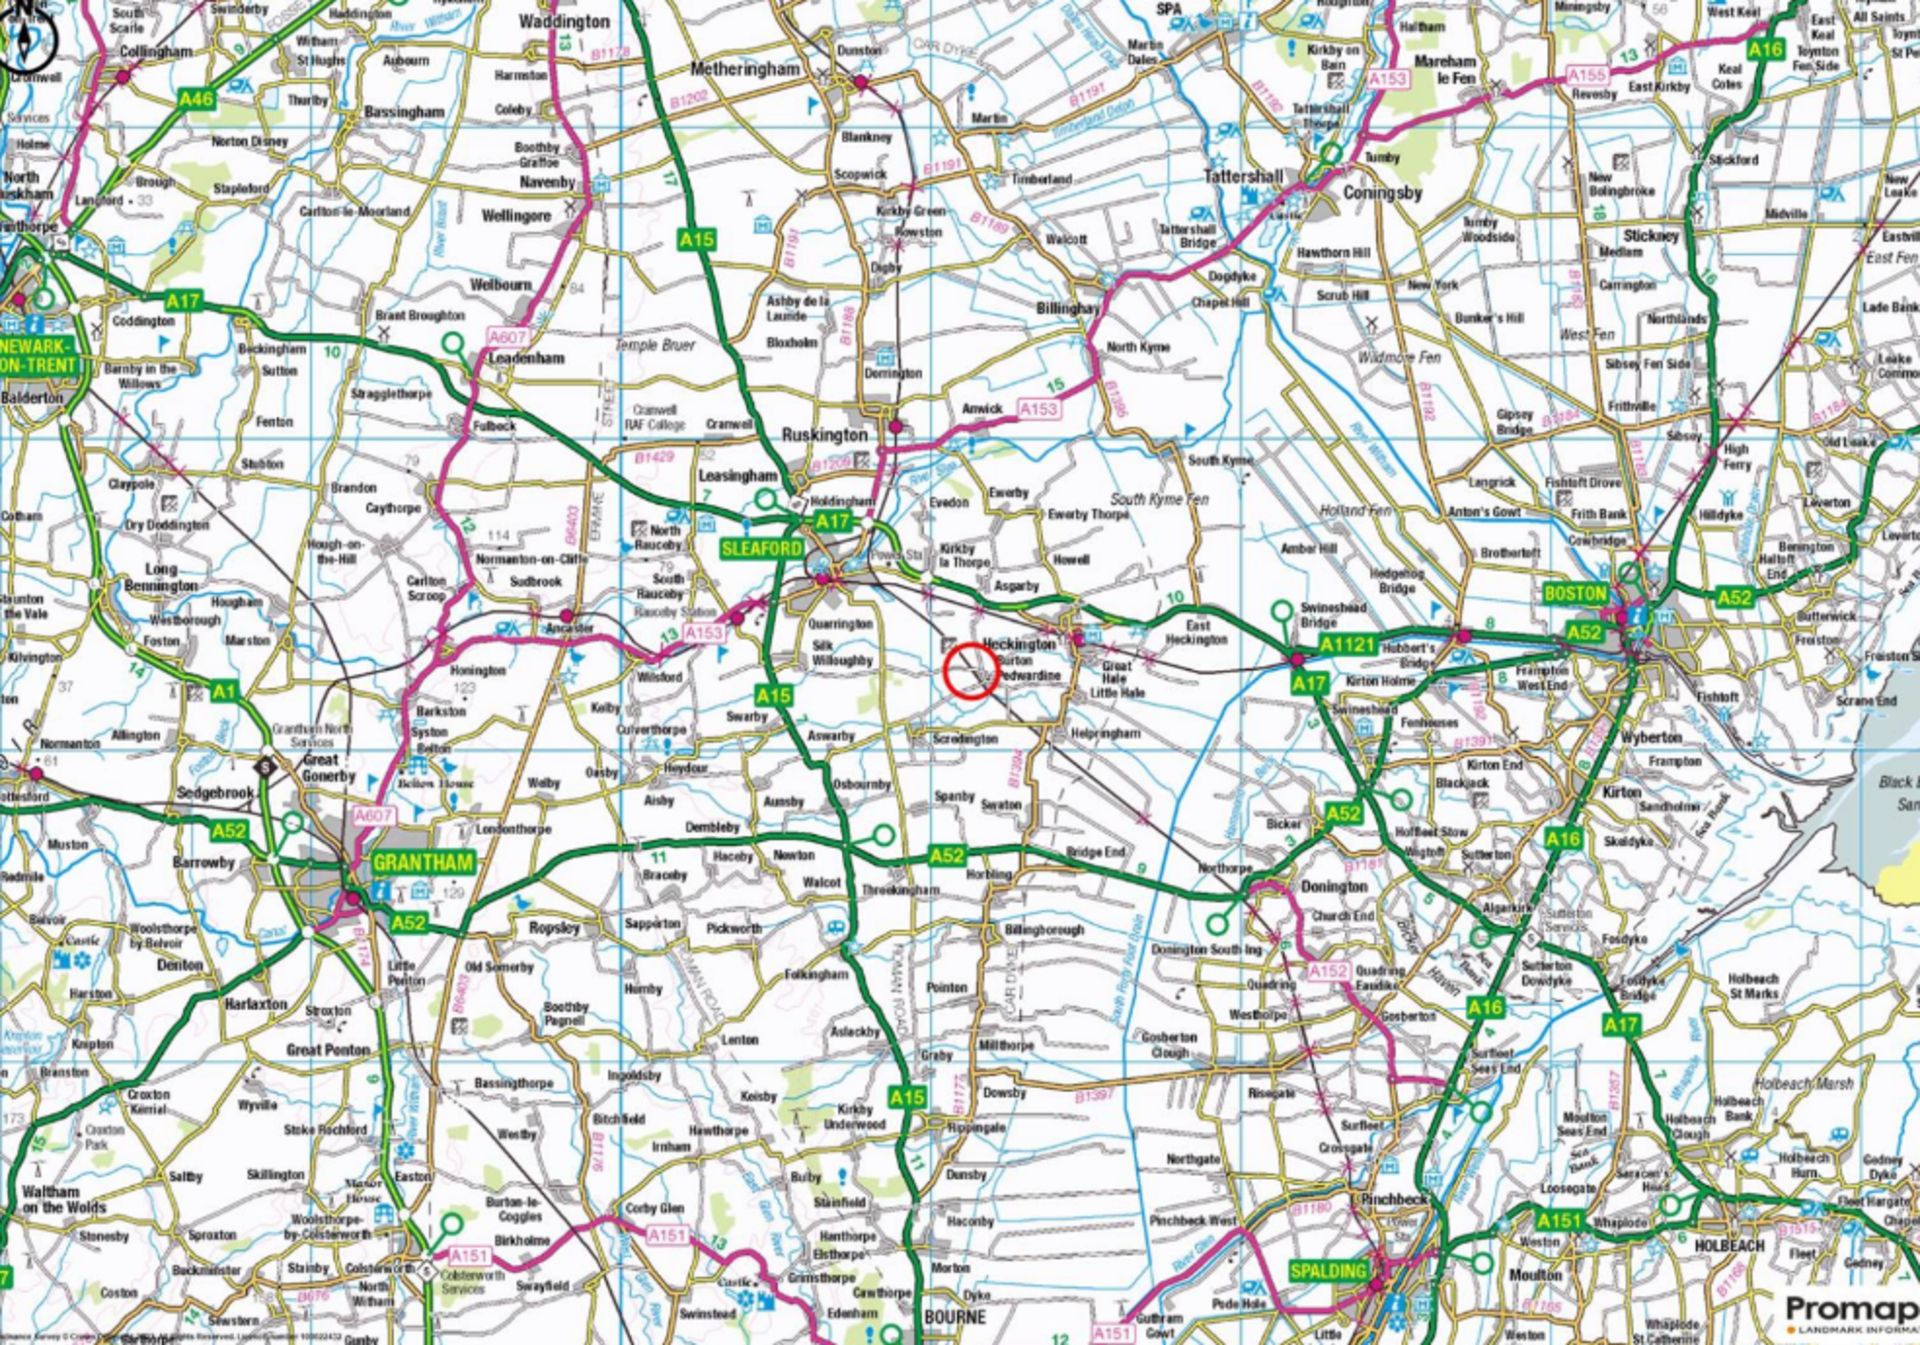 Brackenbury Fishery, White Cross Lane, Burton Pedwardine, Sleaford, Lincolnshire, NG34 0BZ - Image 16 of 16